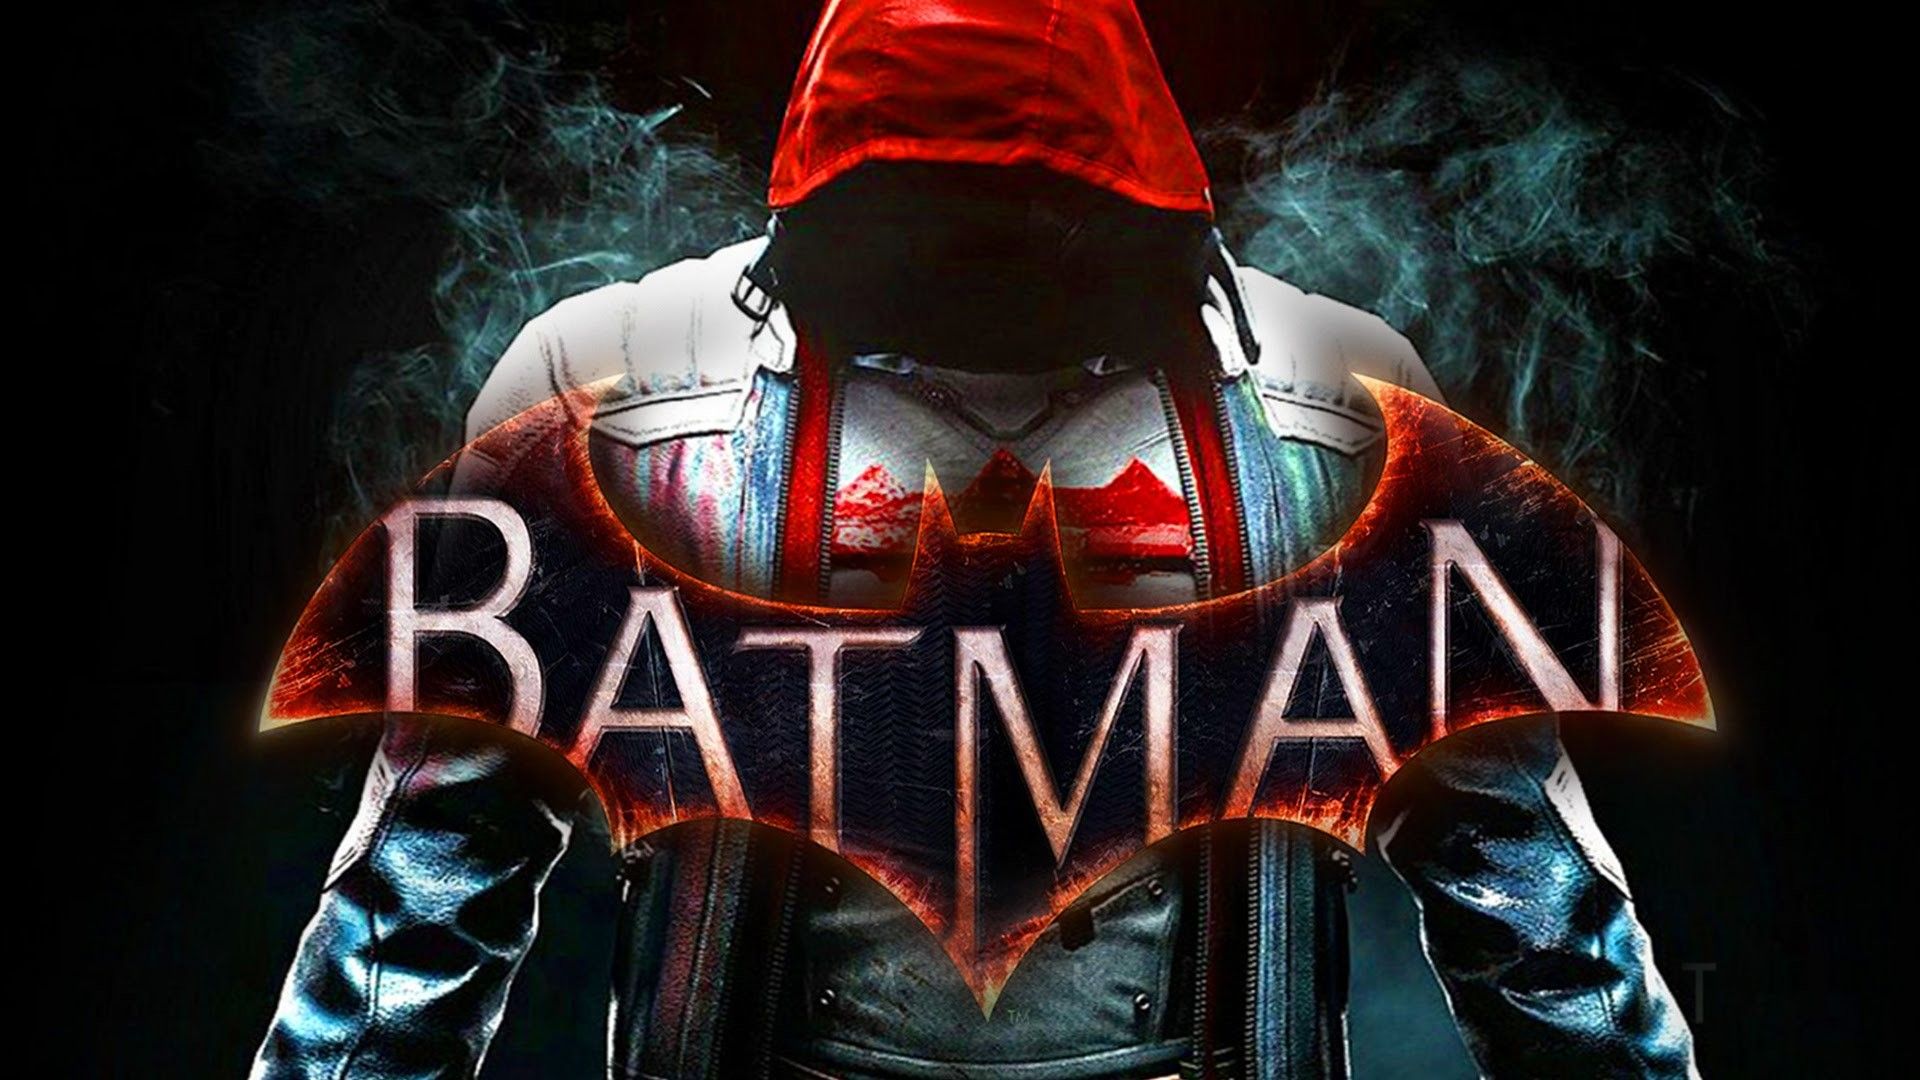 Download free HD wallpaper from above link! #Superheroes  Batman arkham  knight, Arkham knight, Batman arkham knight red hood